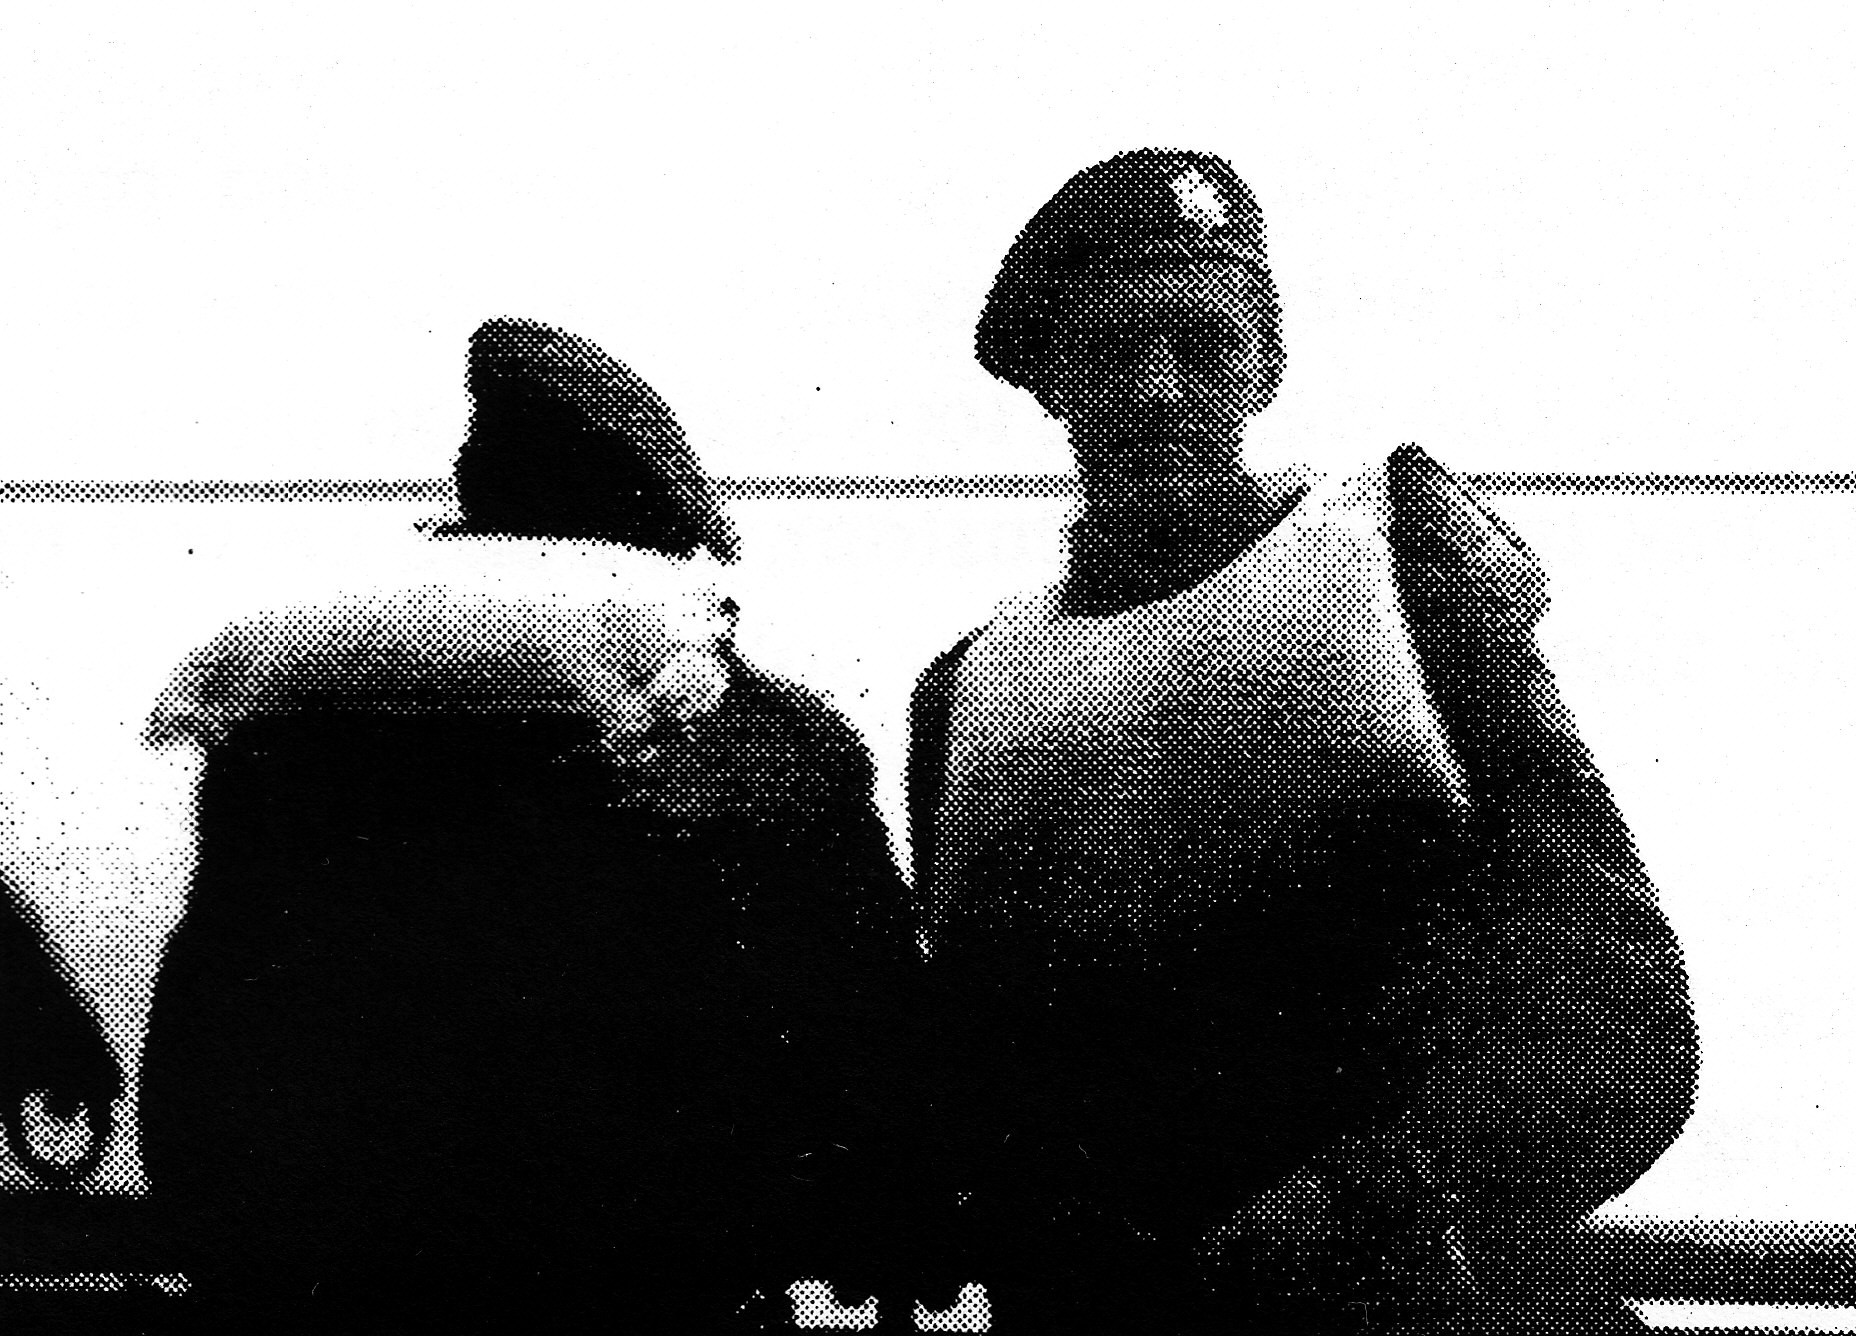 John Marin wearing a uniform and life preserver on board a ship